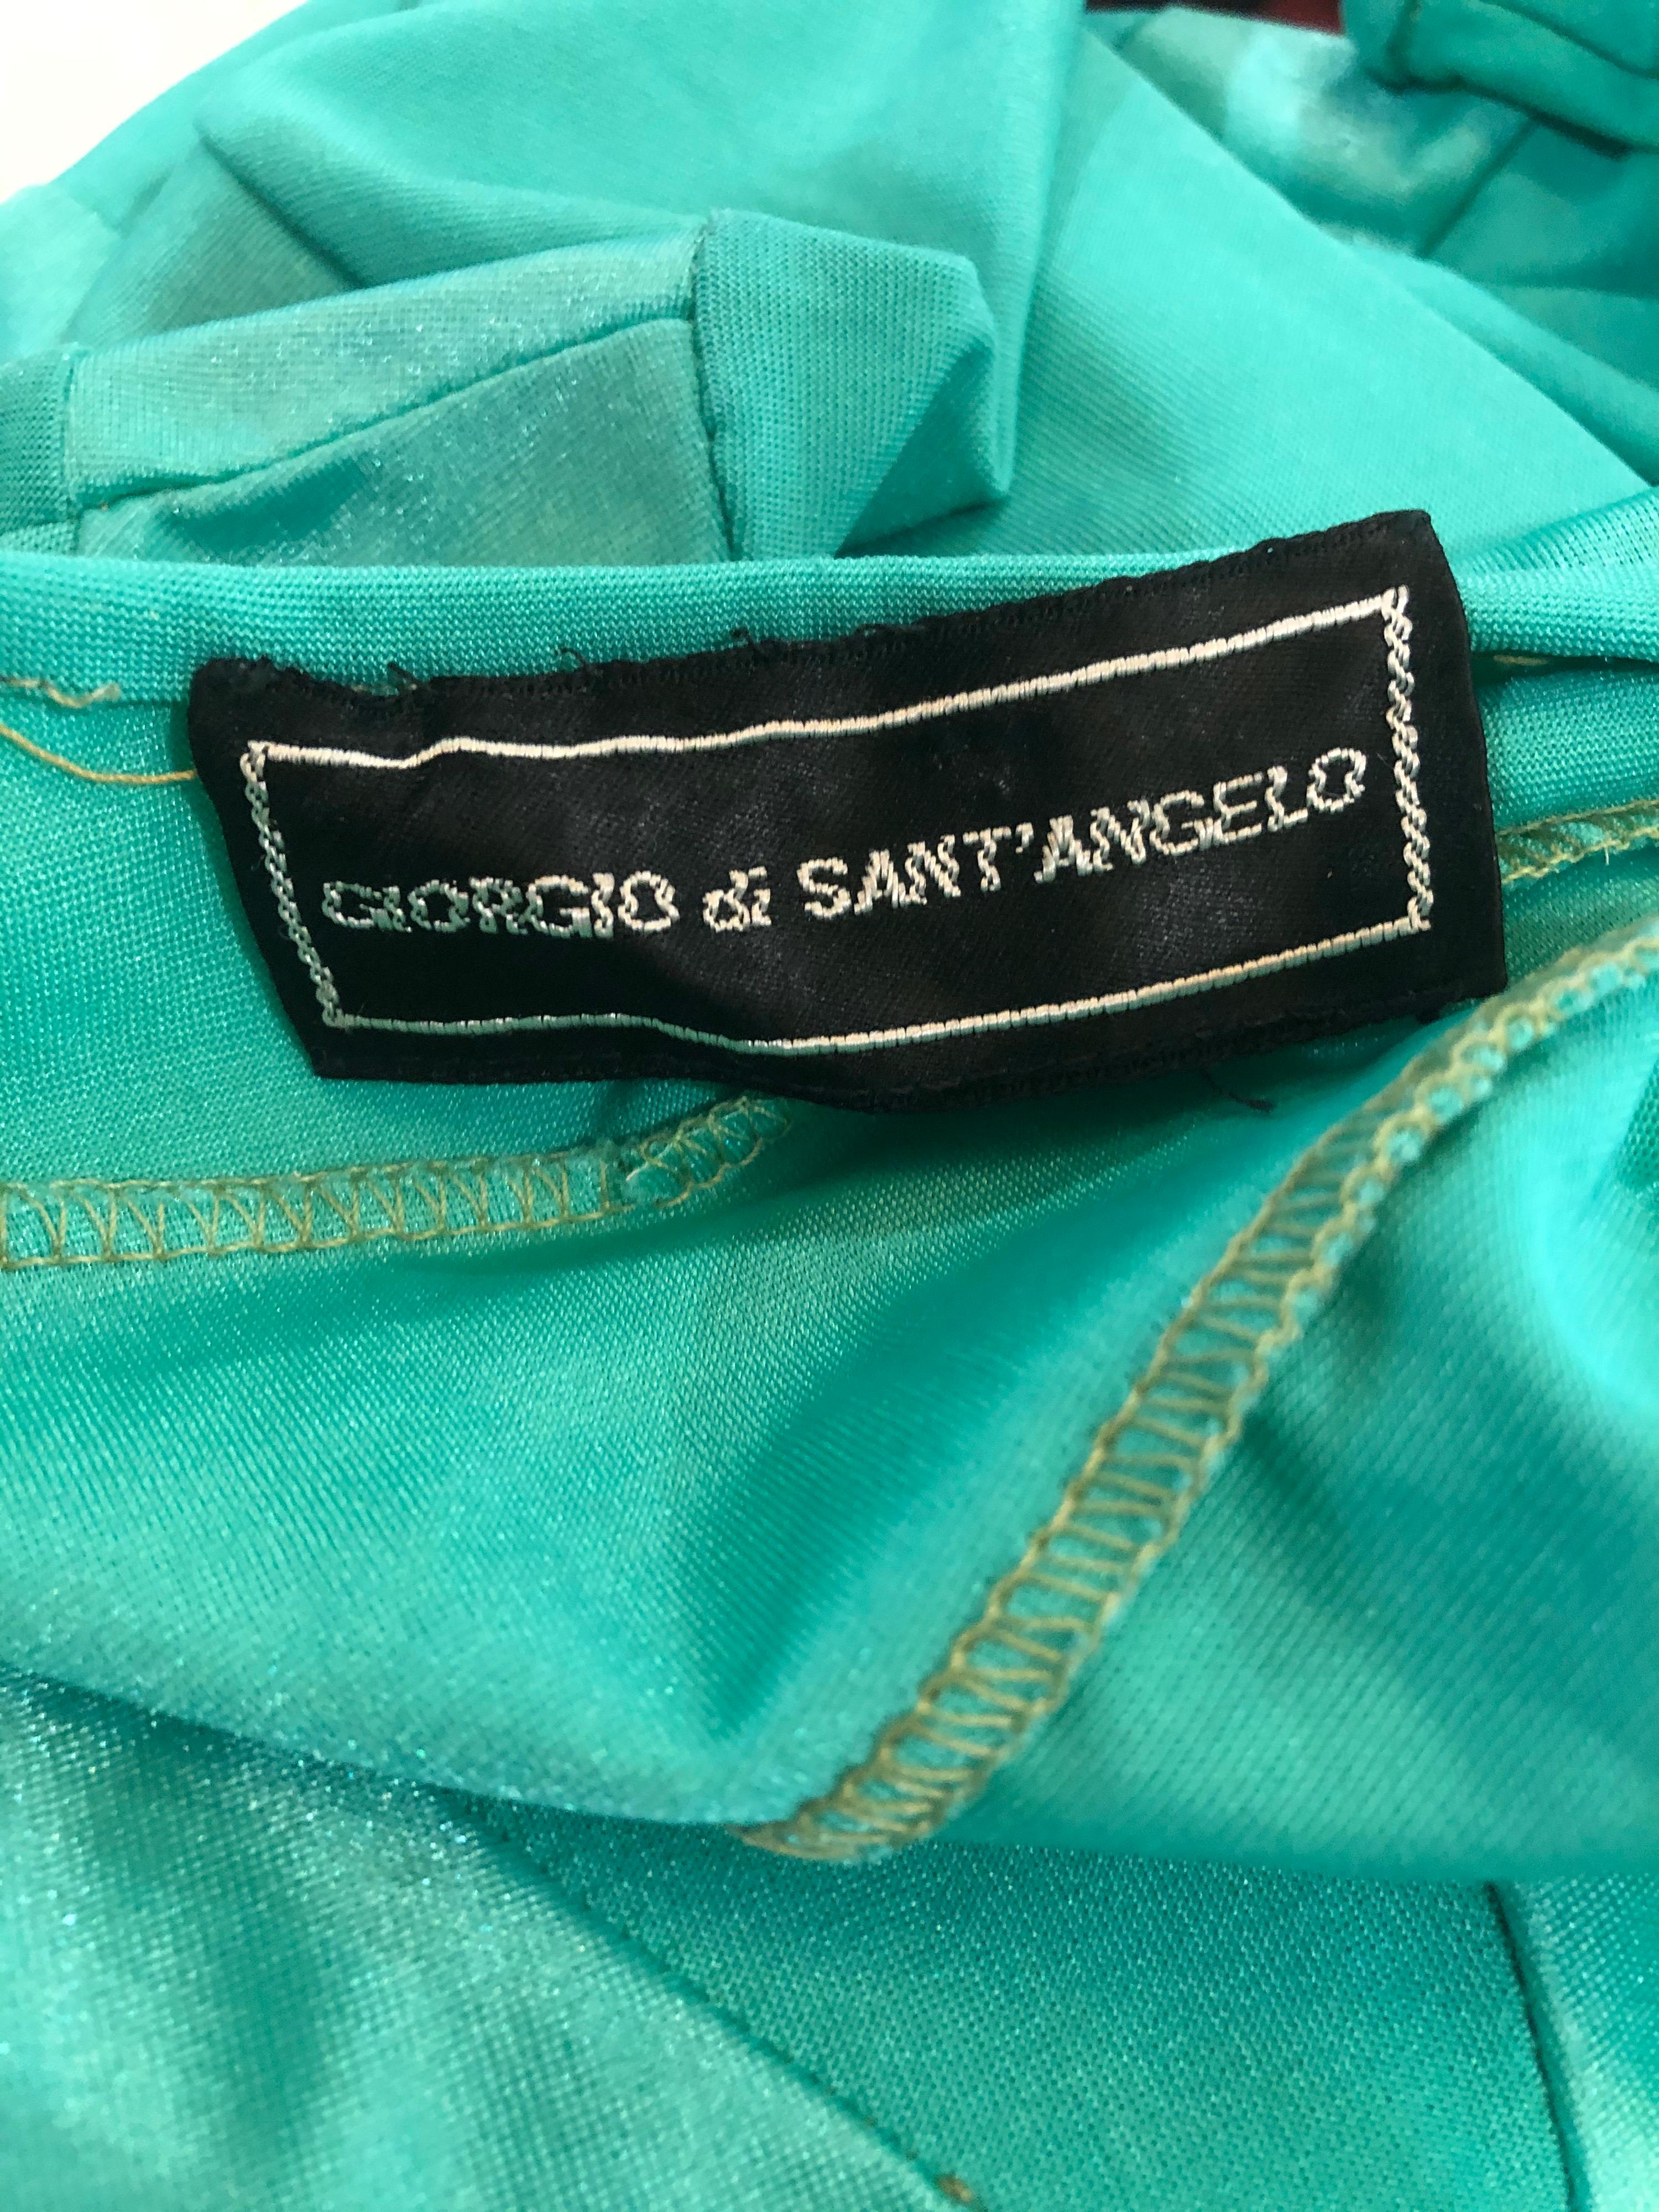 1970s Giorgio di Sant Angelo Kelly Green Slinky Bodysuit 70s Vintage Dress For Sale 9